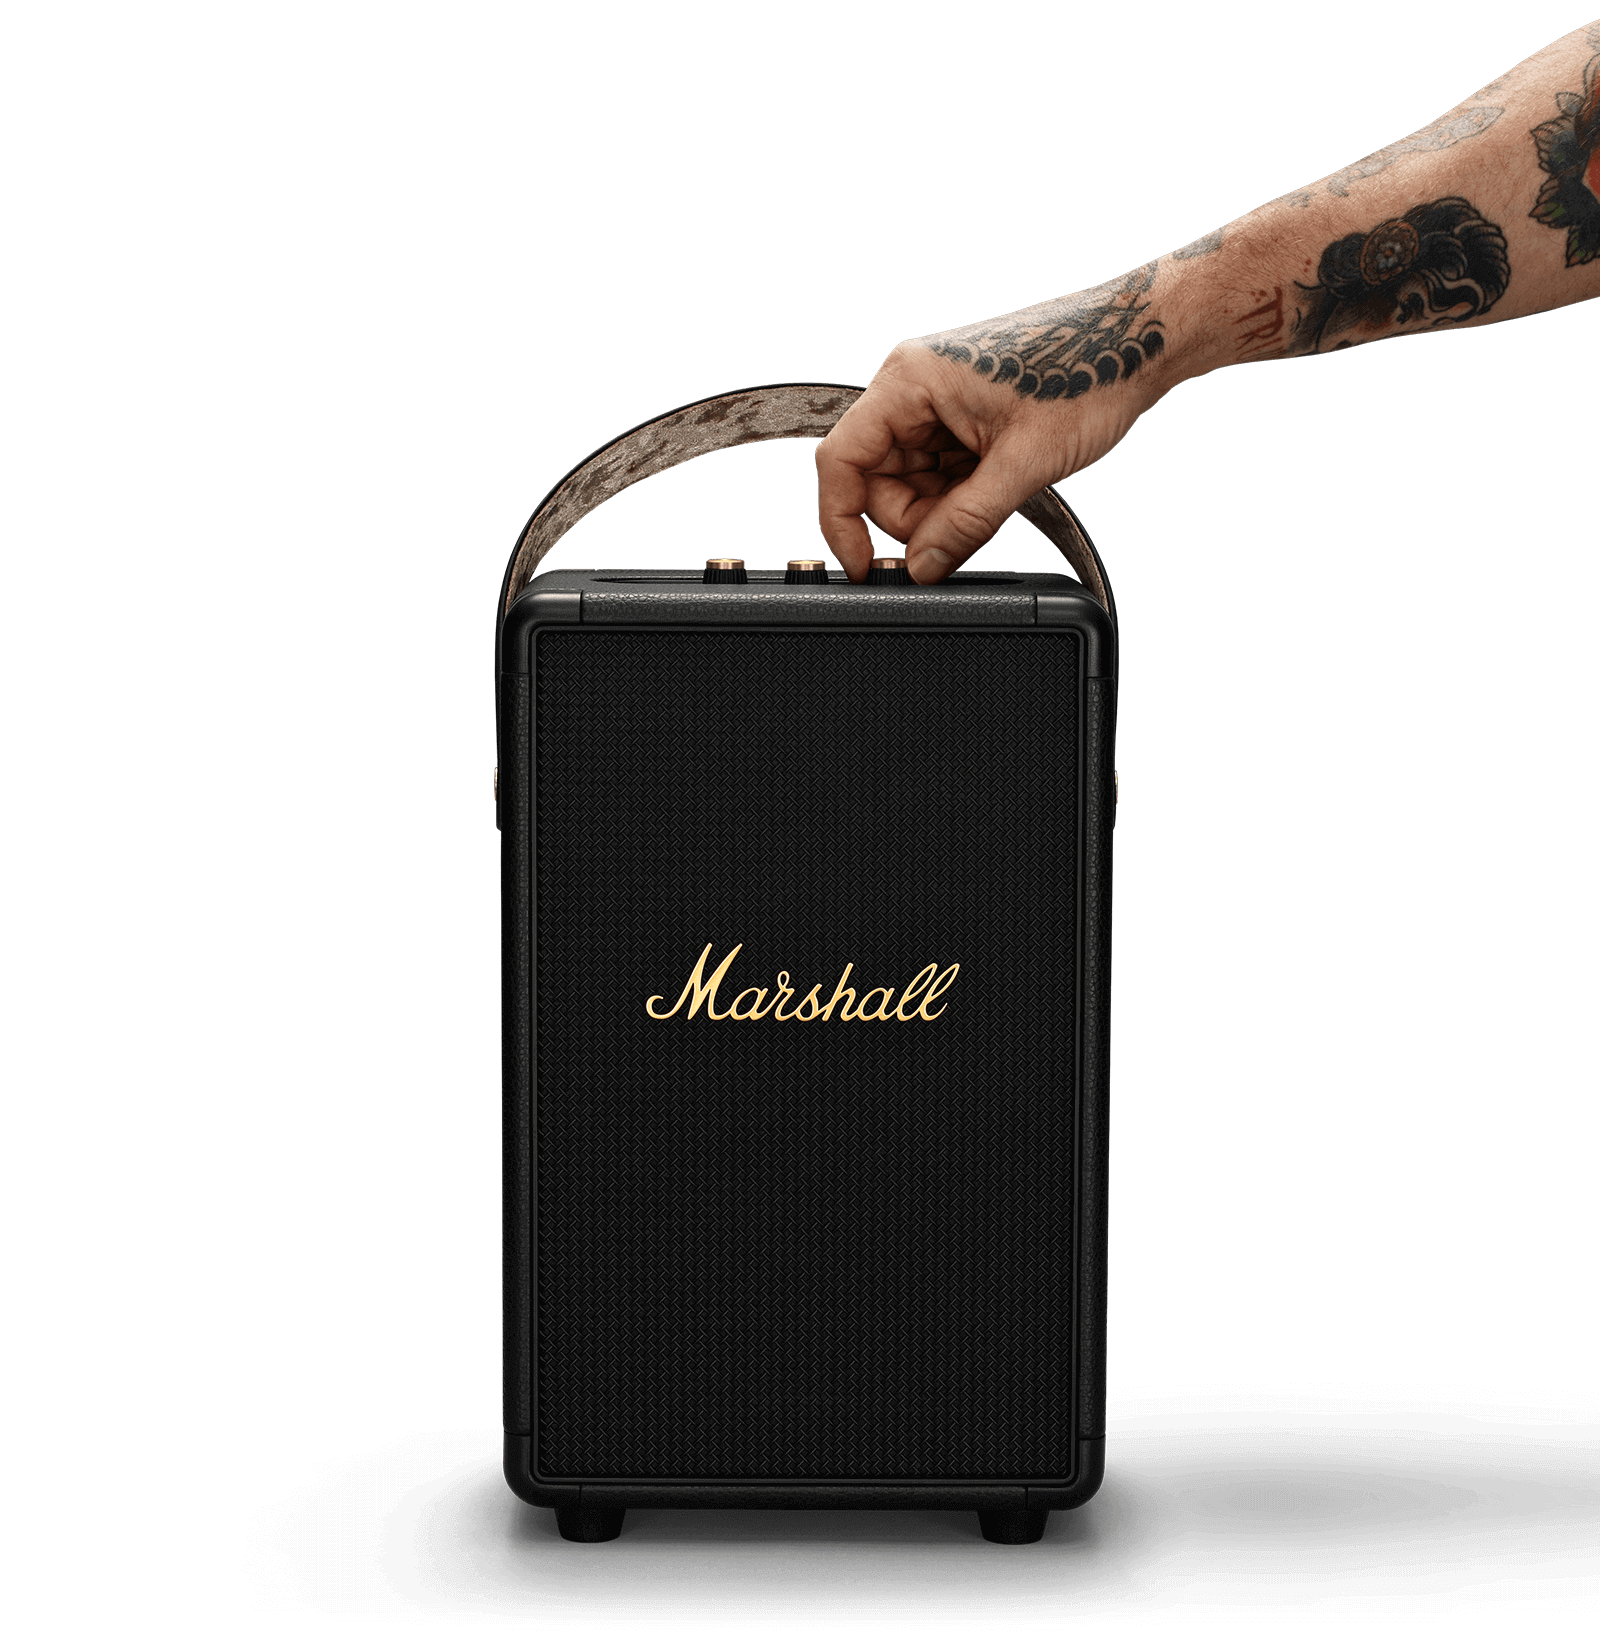 Speaker Marshall Portable | Marshall Buy Tufton